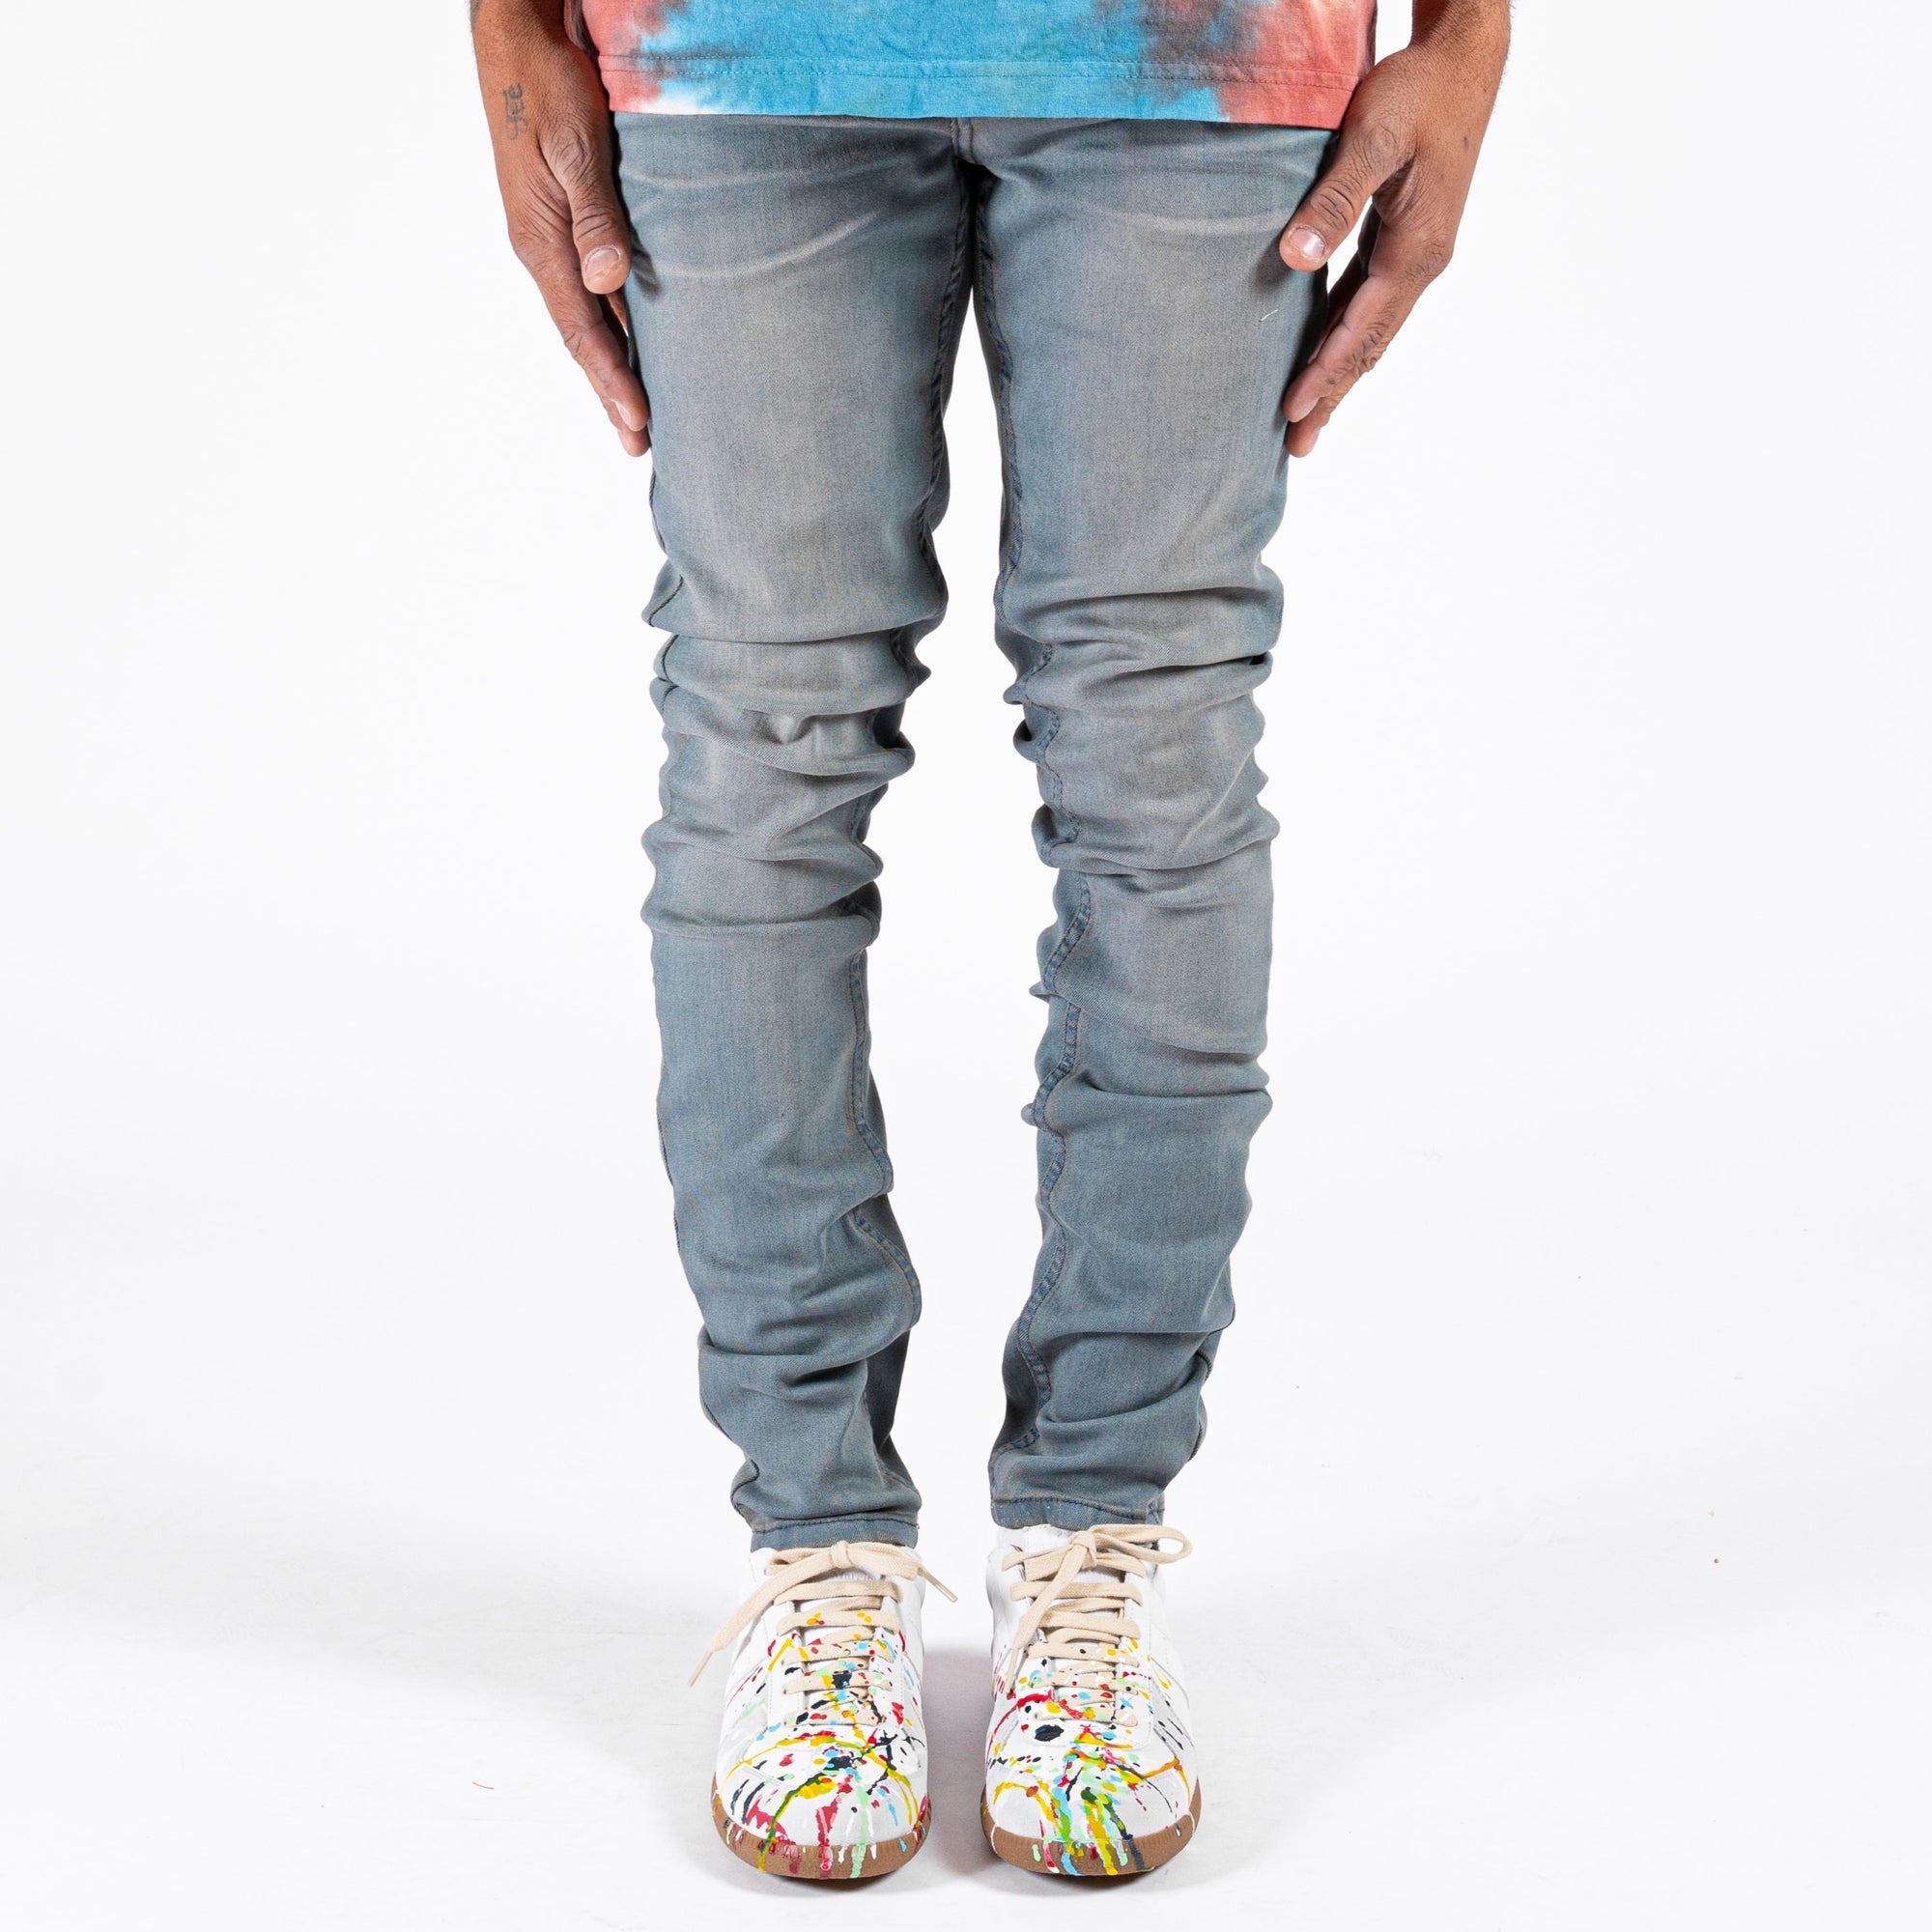 Serenede - Seafoam Jeans (Slate)